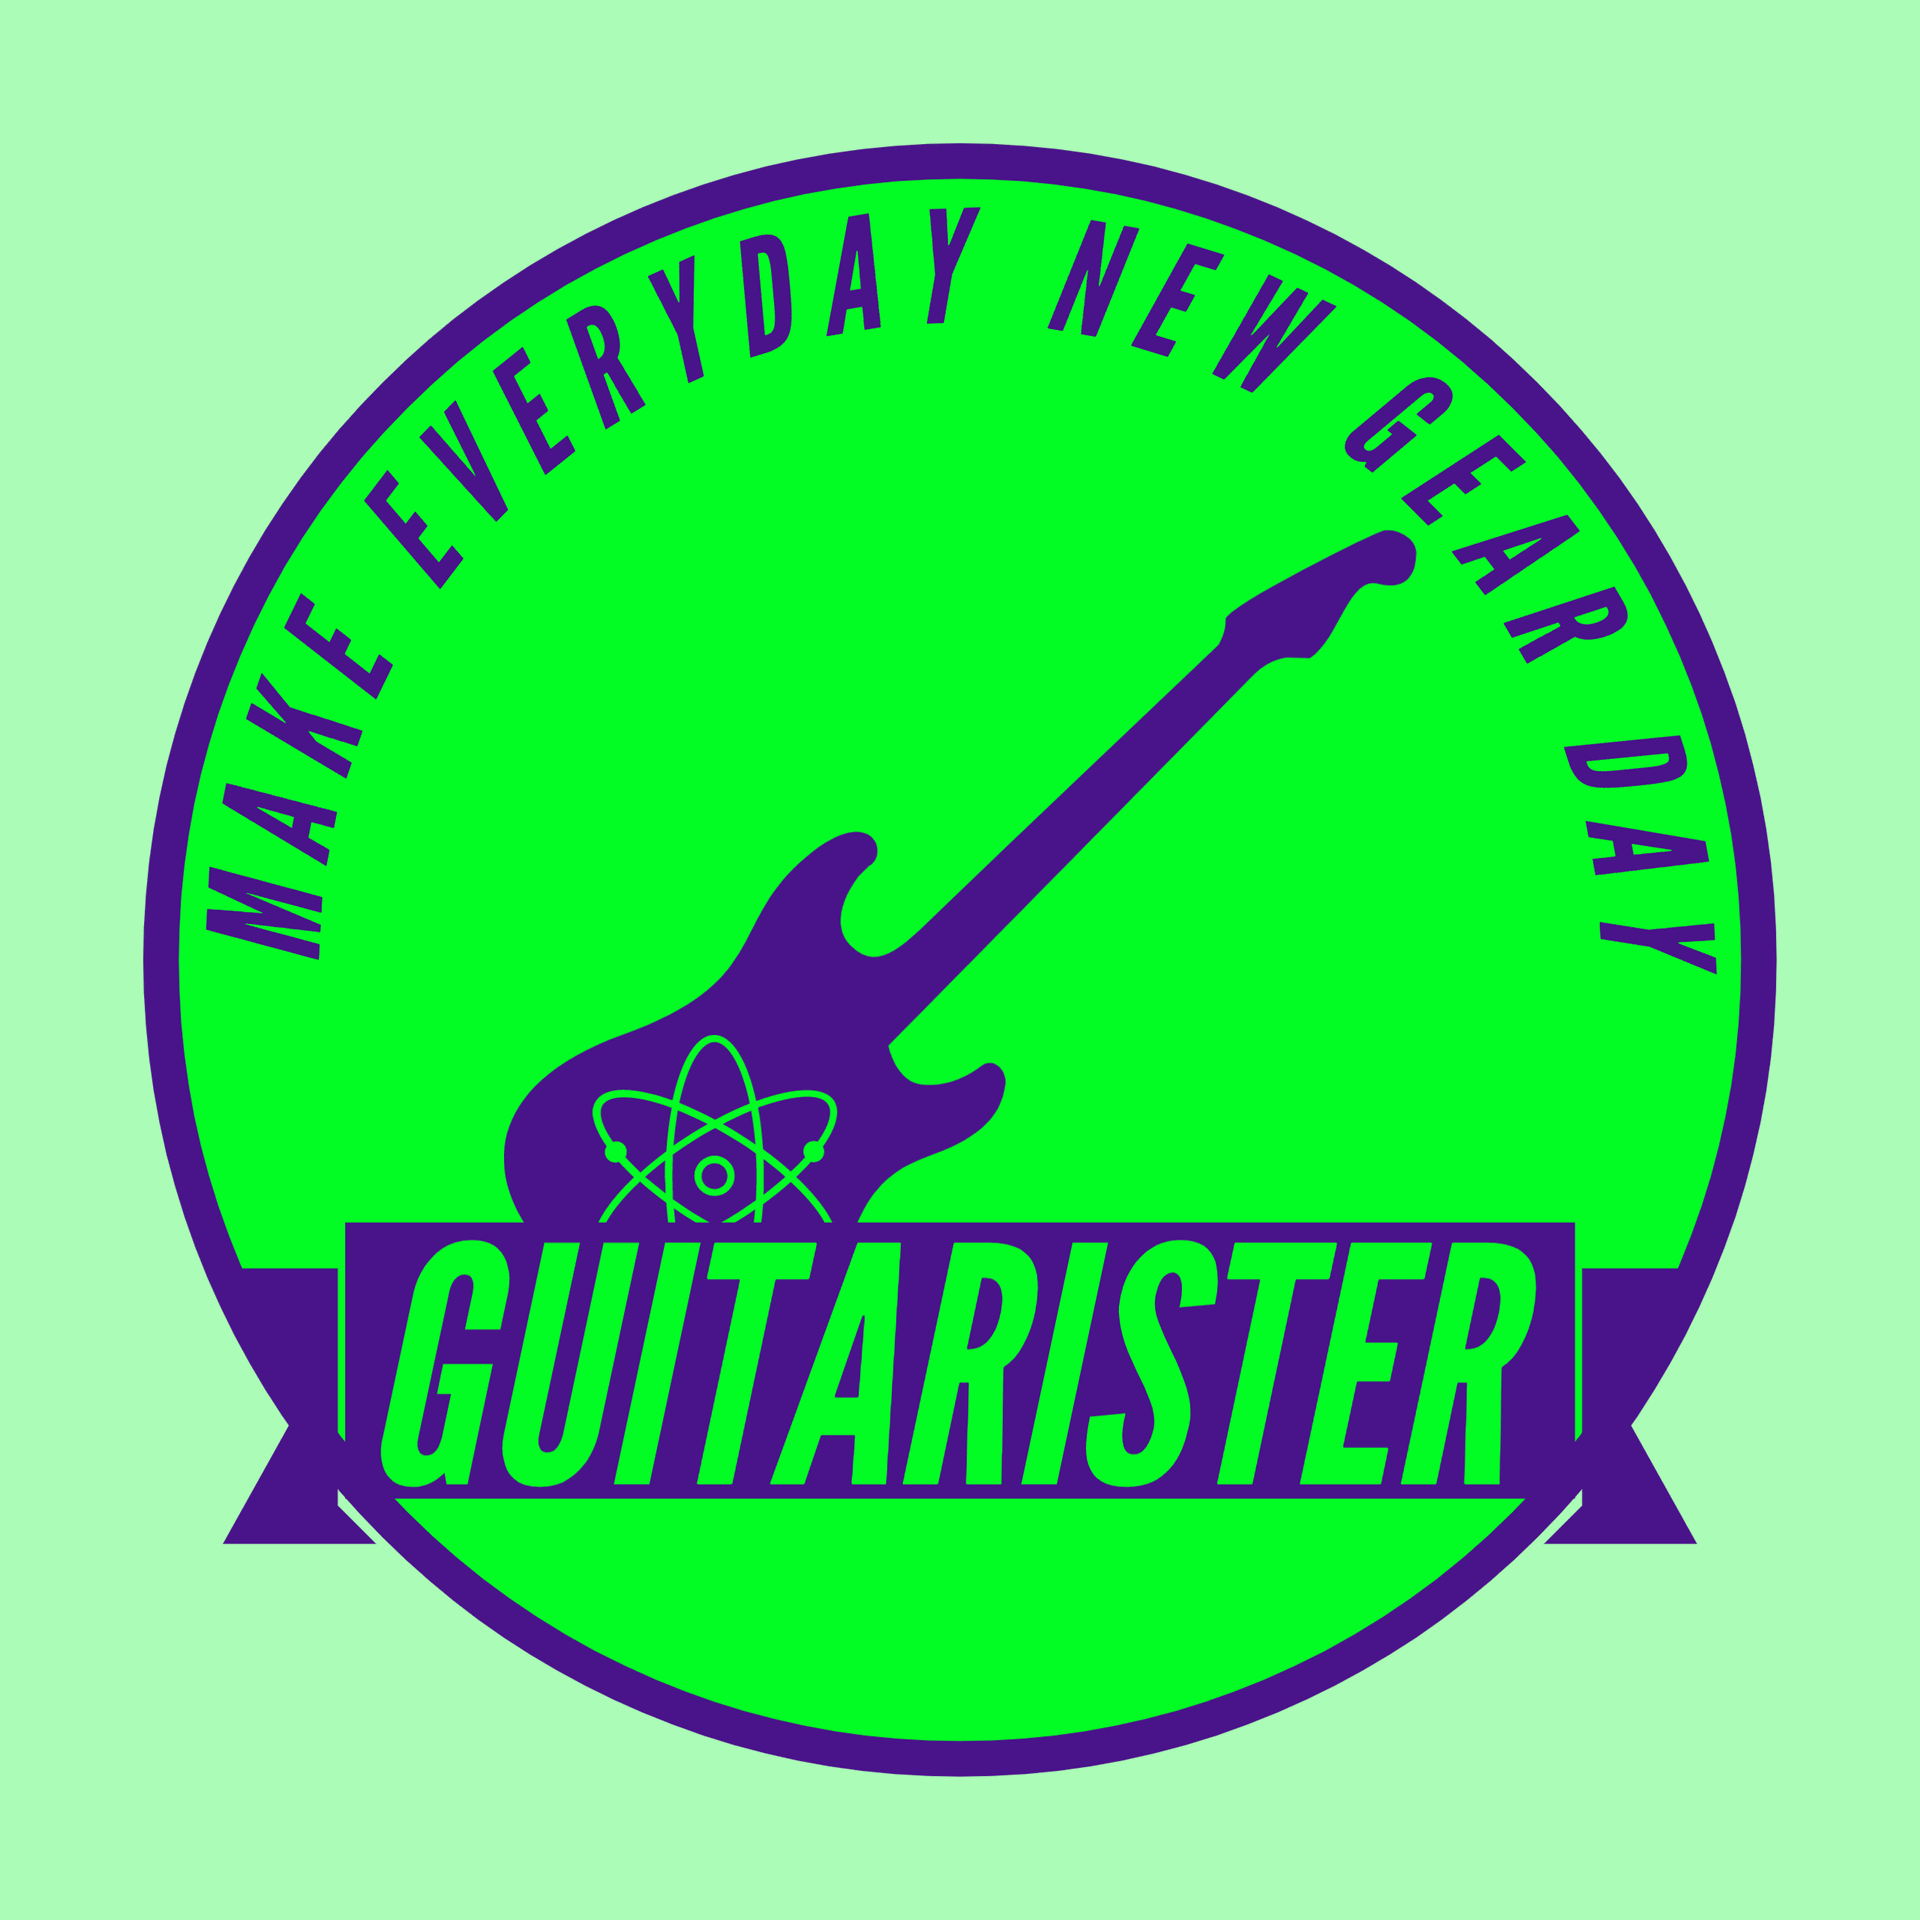 Guitarister Logo